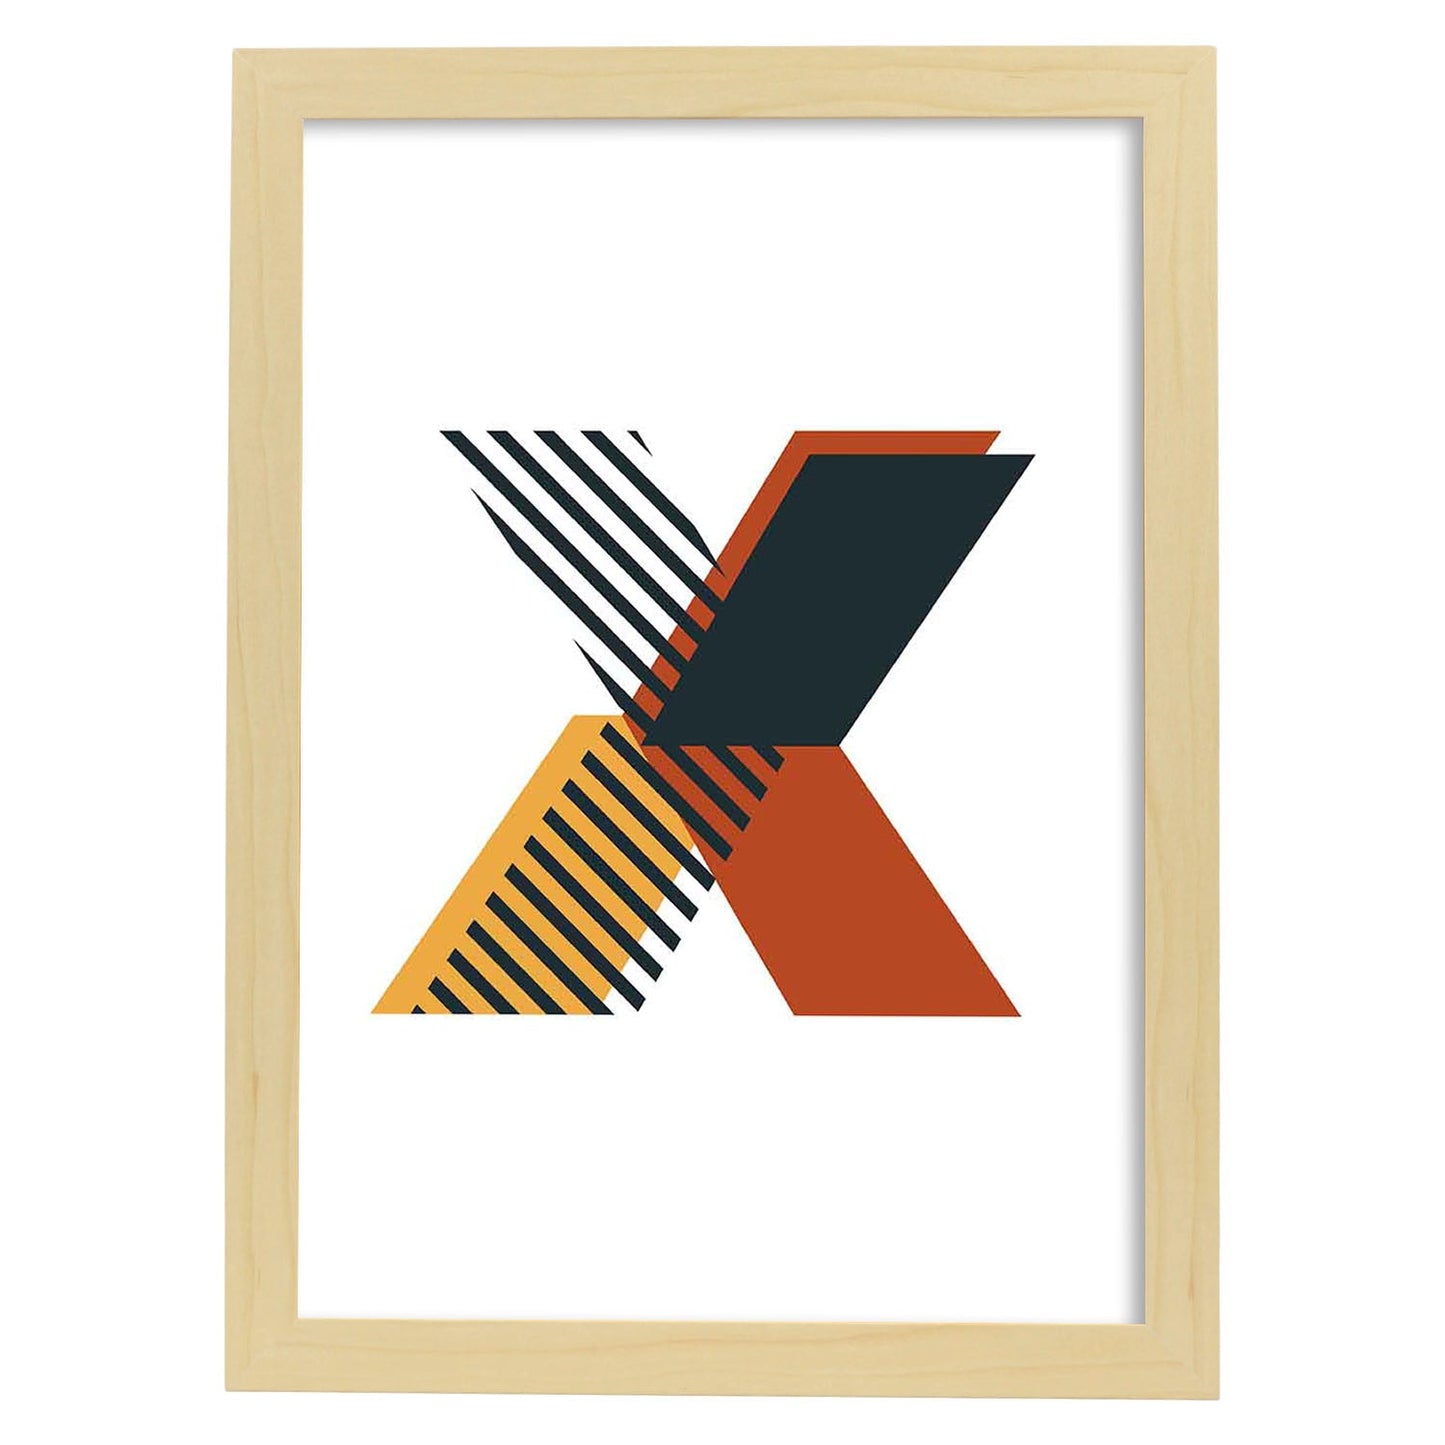 Poster de letra X. Lámina estilo Geometria con imágenes del alfabeto.-Artwork-Nacnic-A3-Marco Madera clara-Nacnic Estudio SL